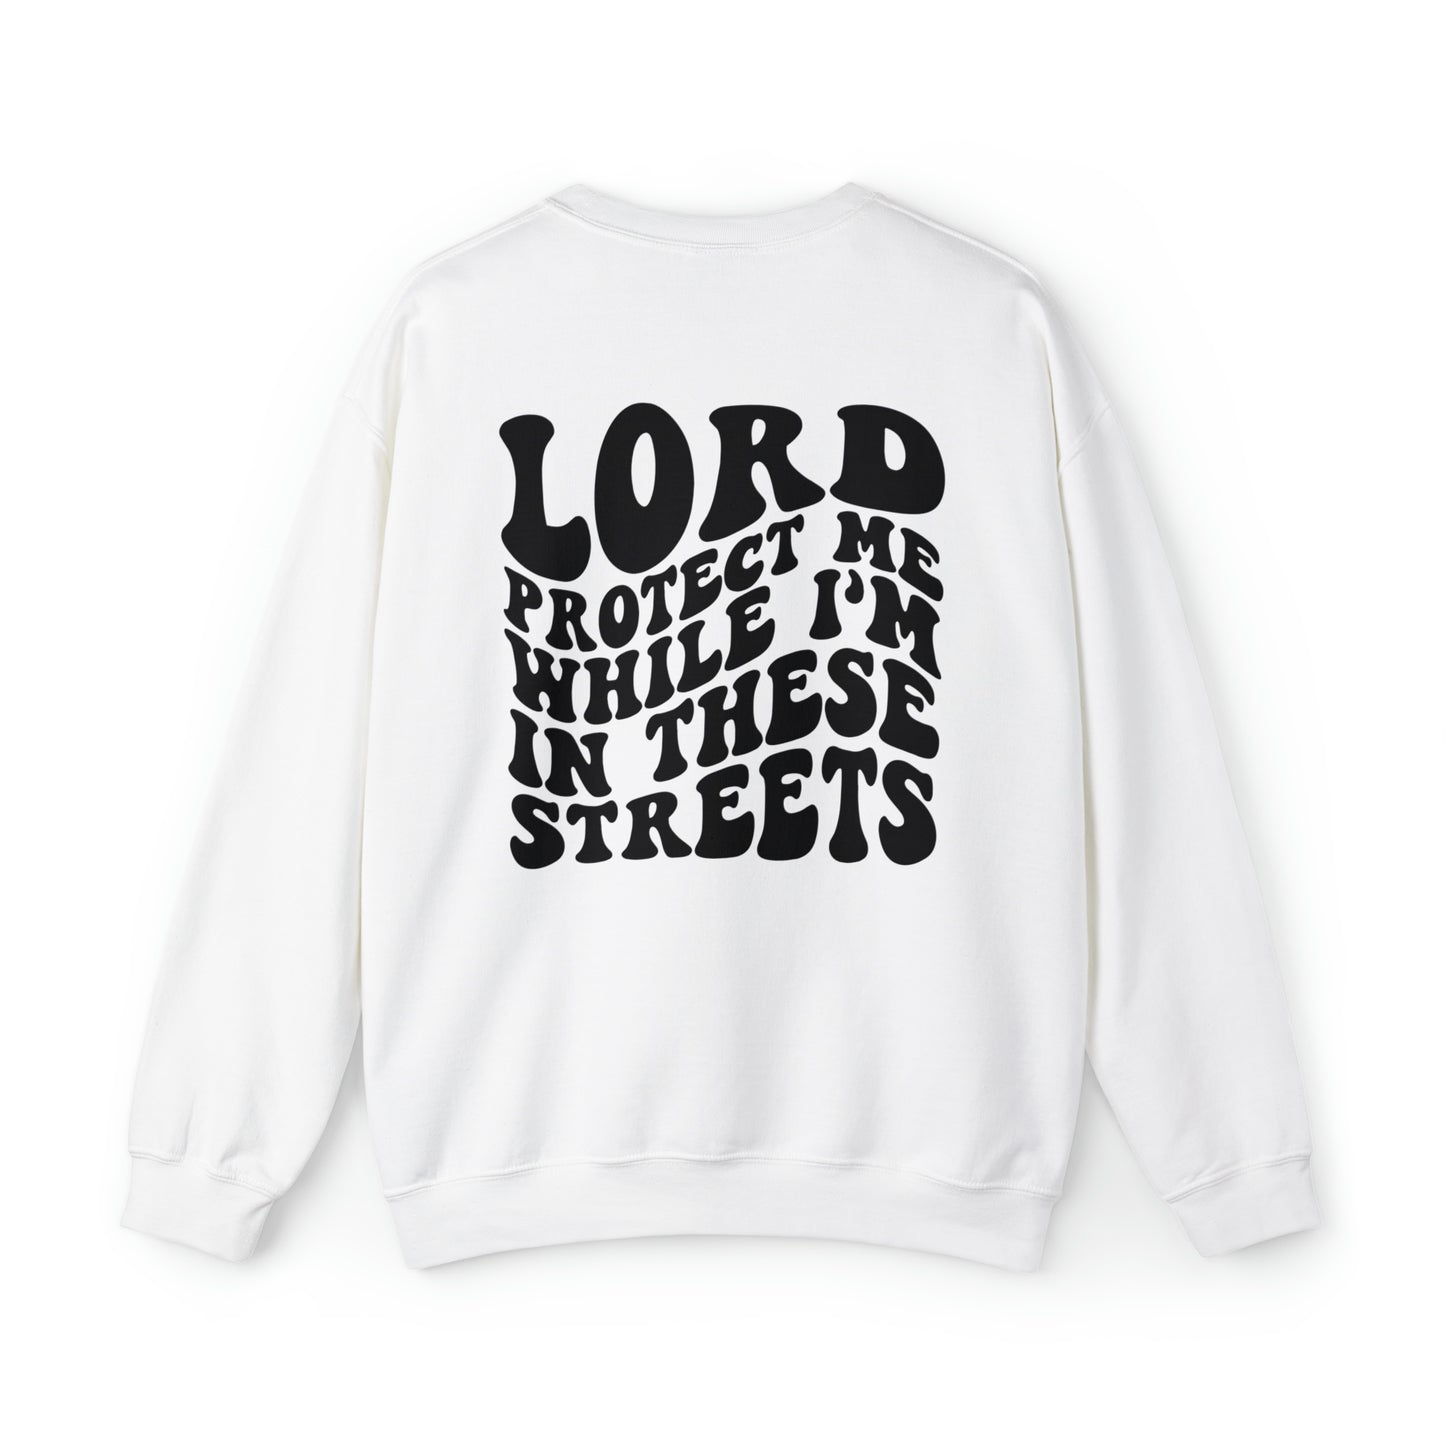 Guarded in Faith | Christian Streetwear Sweatshirt (White)